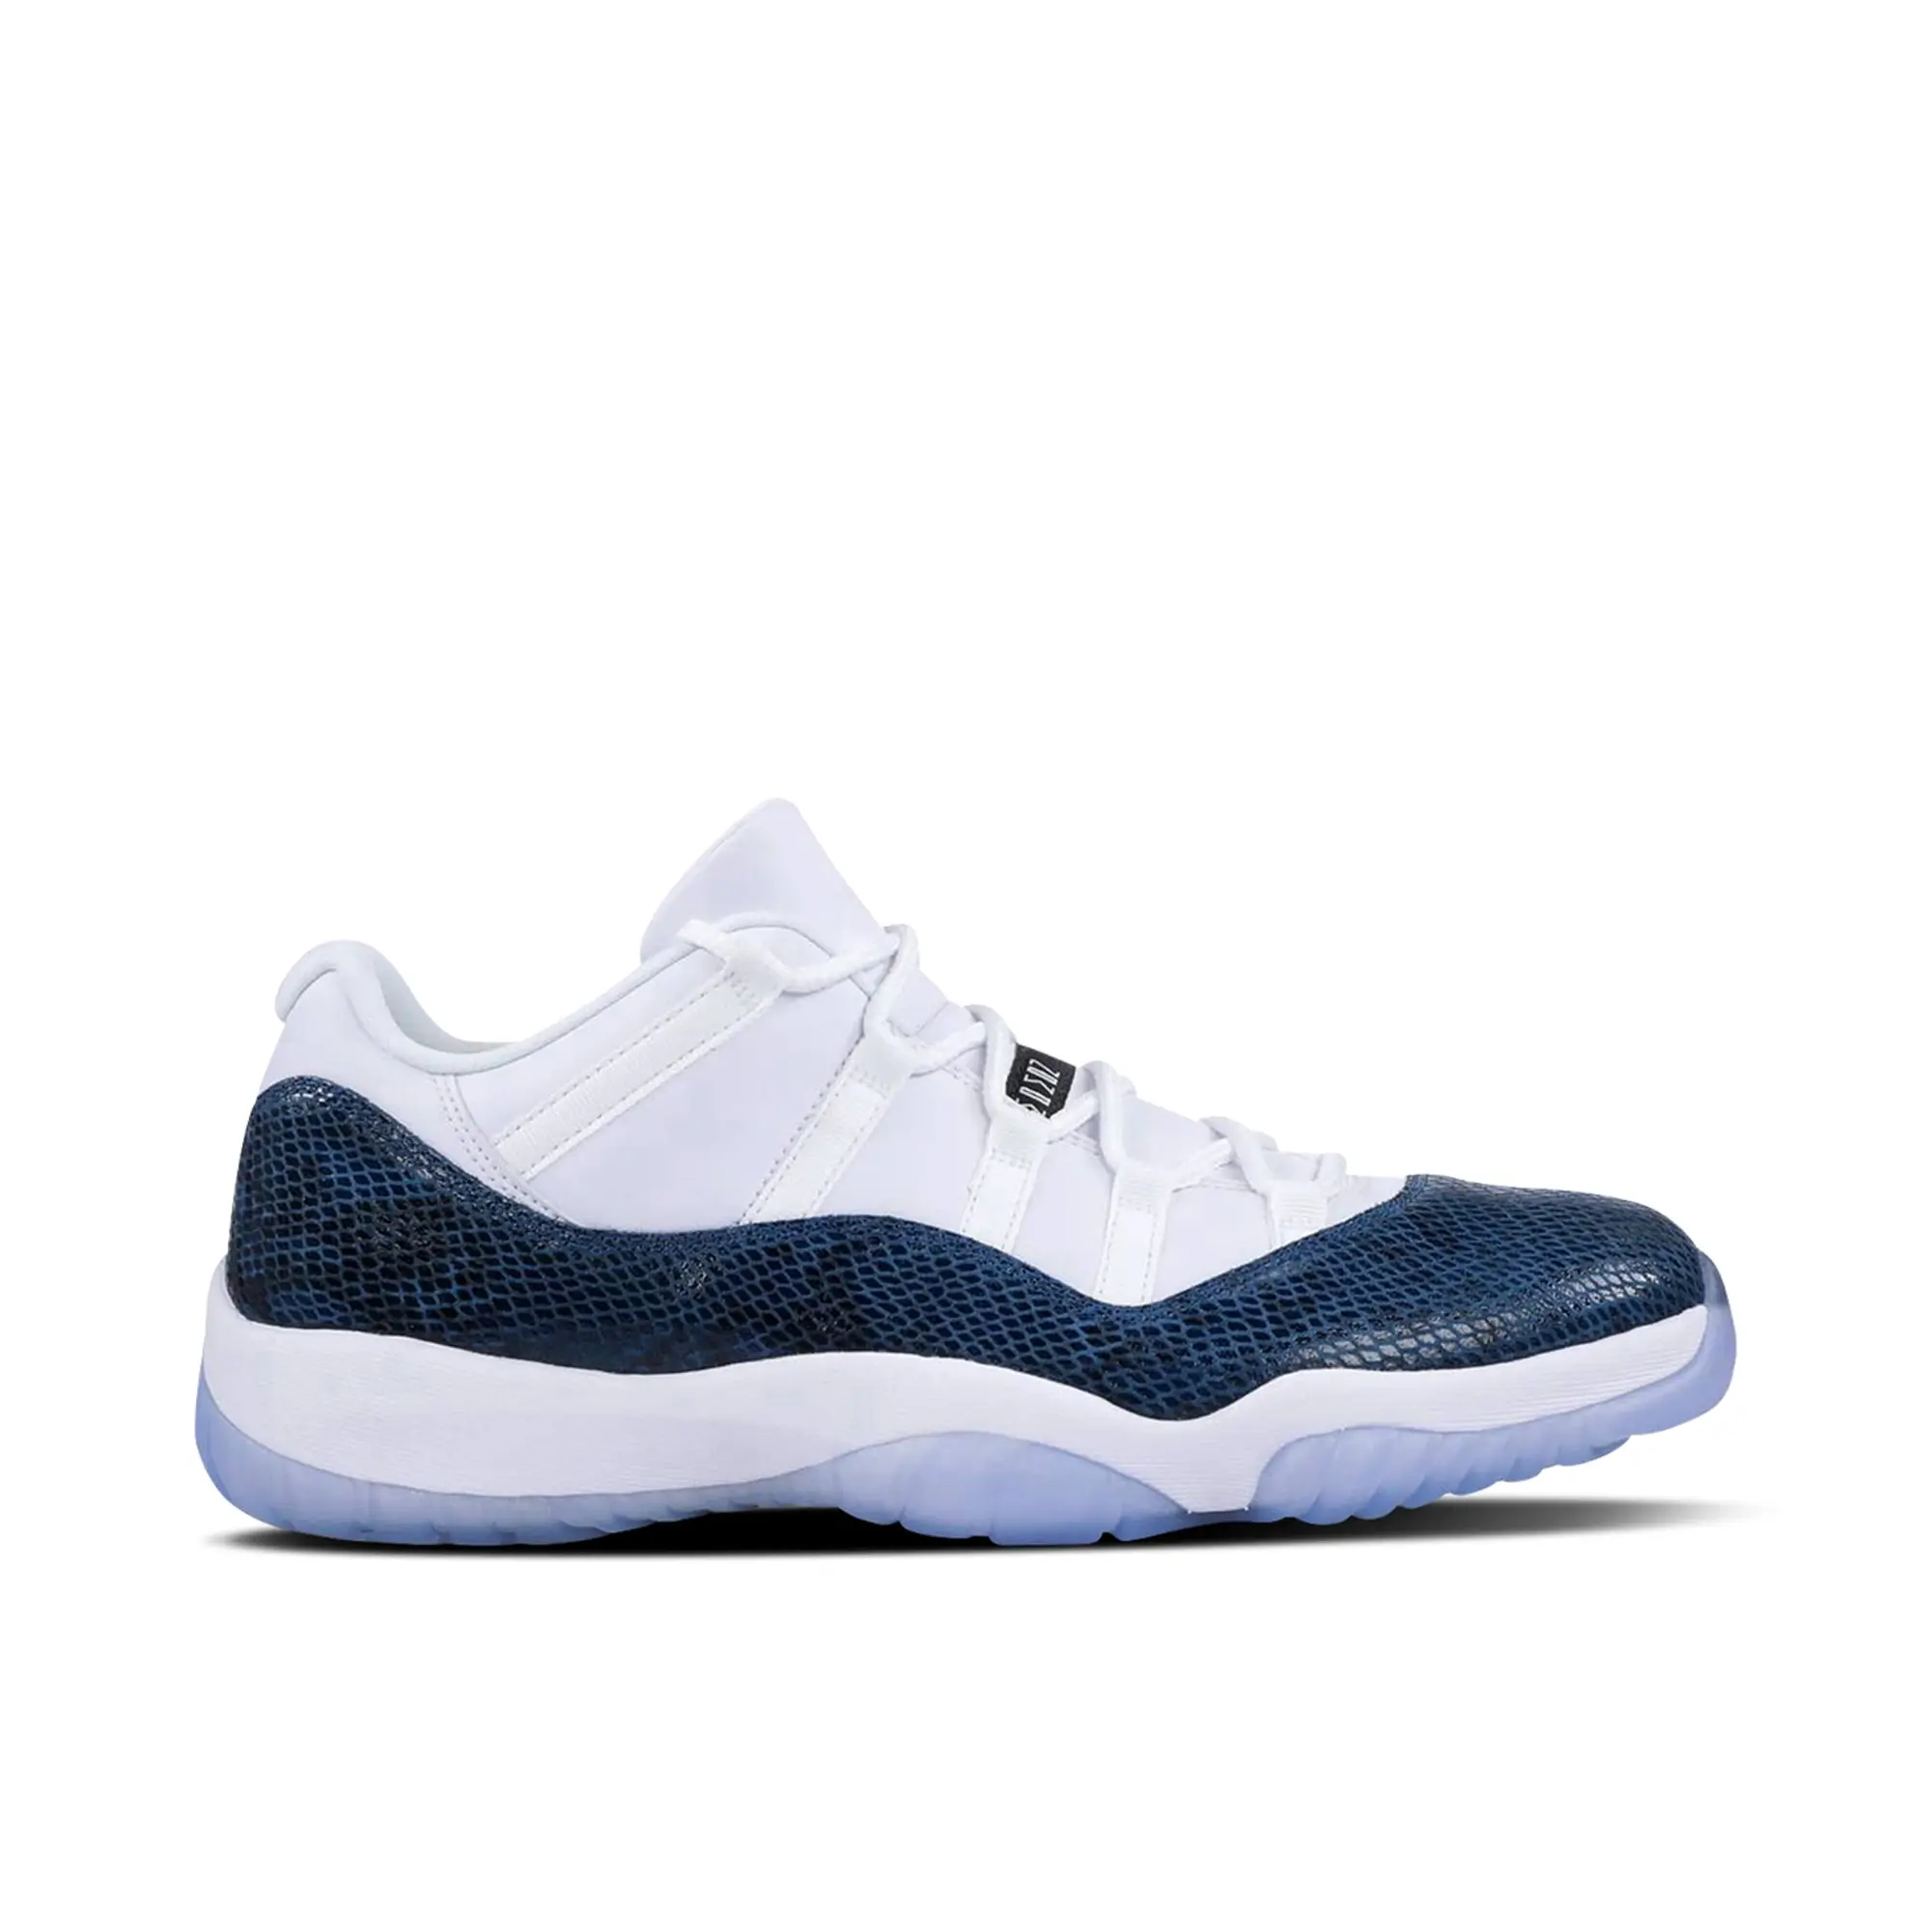 Nike Air Jordan 11 Retro Low LE Blue Snakeskin Shoes